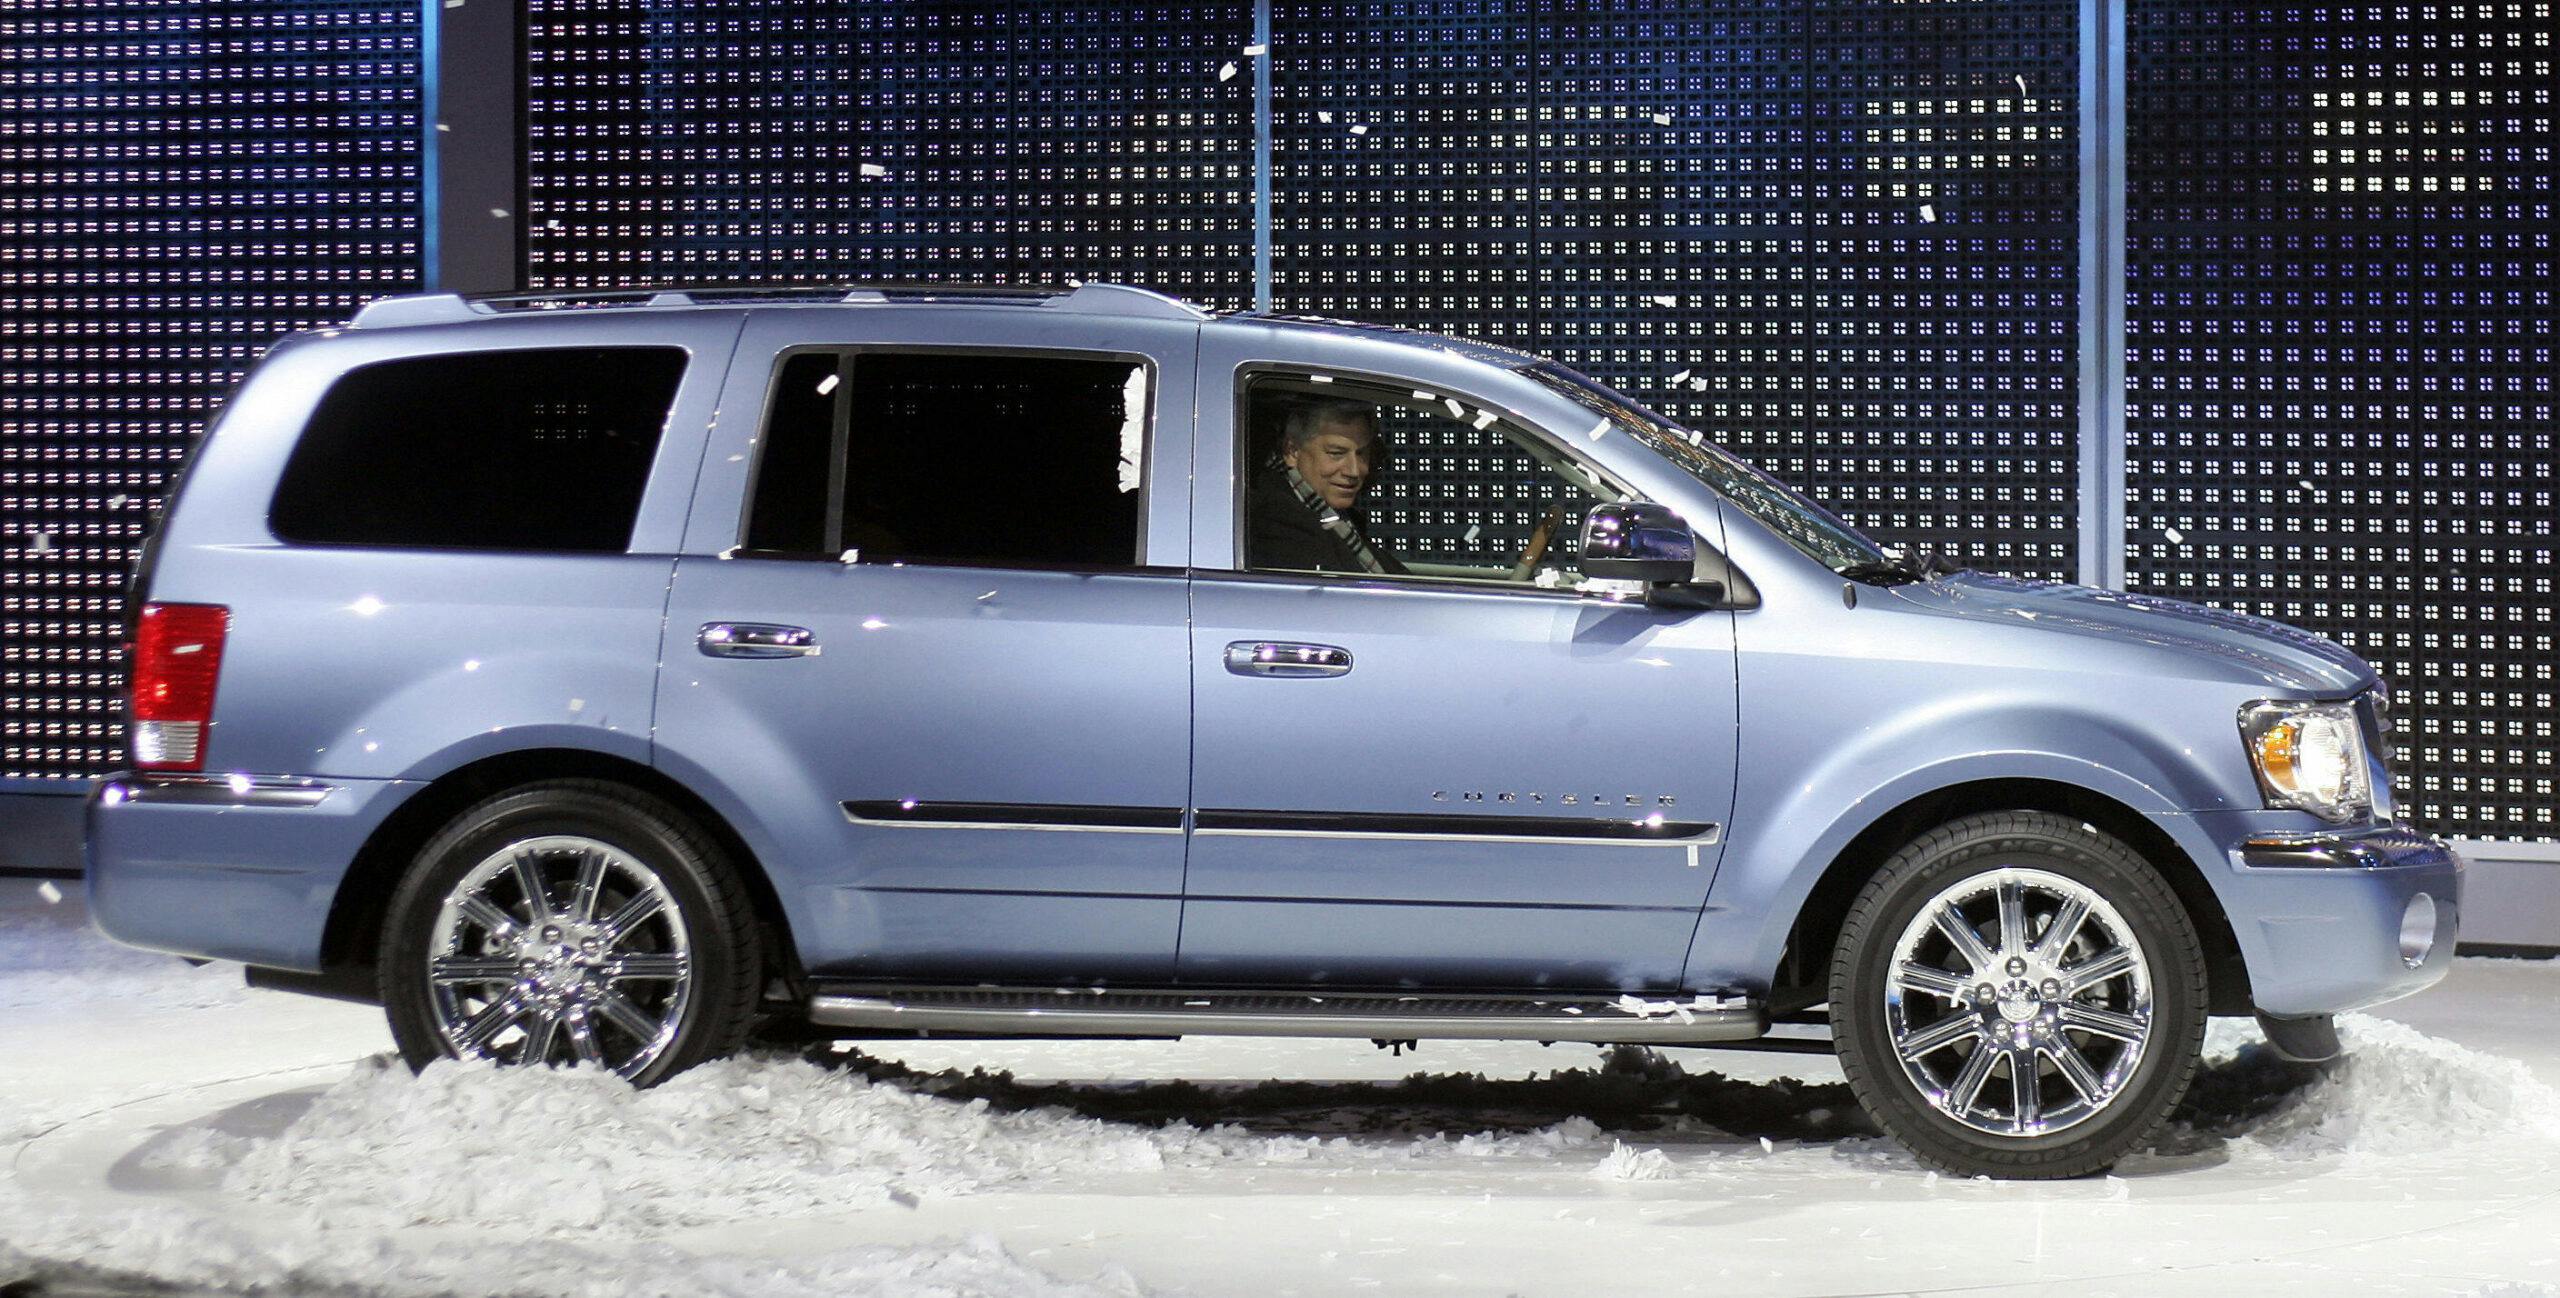 Detroit Auto Show fake snow chrysler aspen blizzard debut 2006